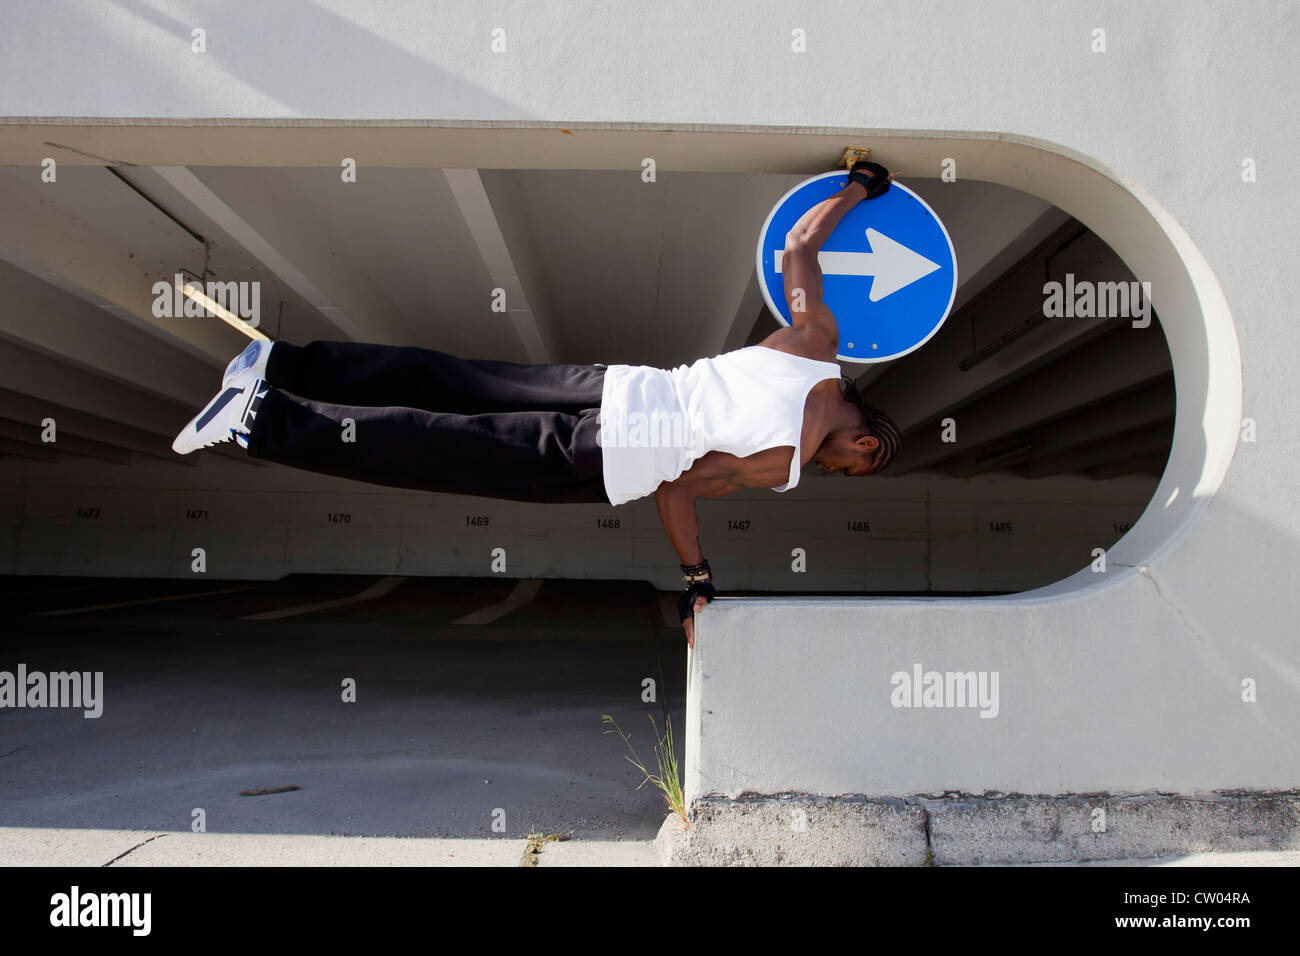 Man balancing on ledge on city street Stock Photo